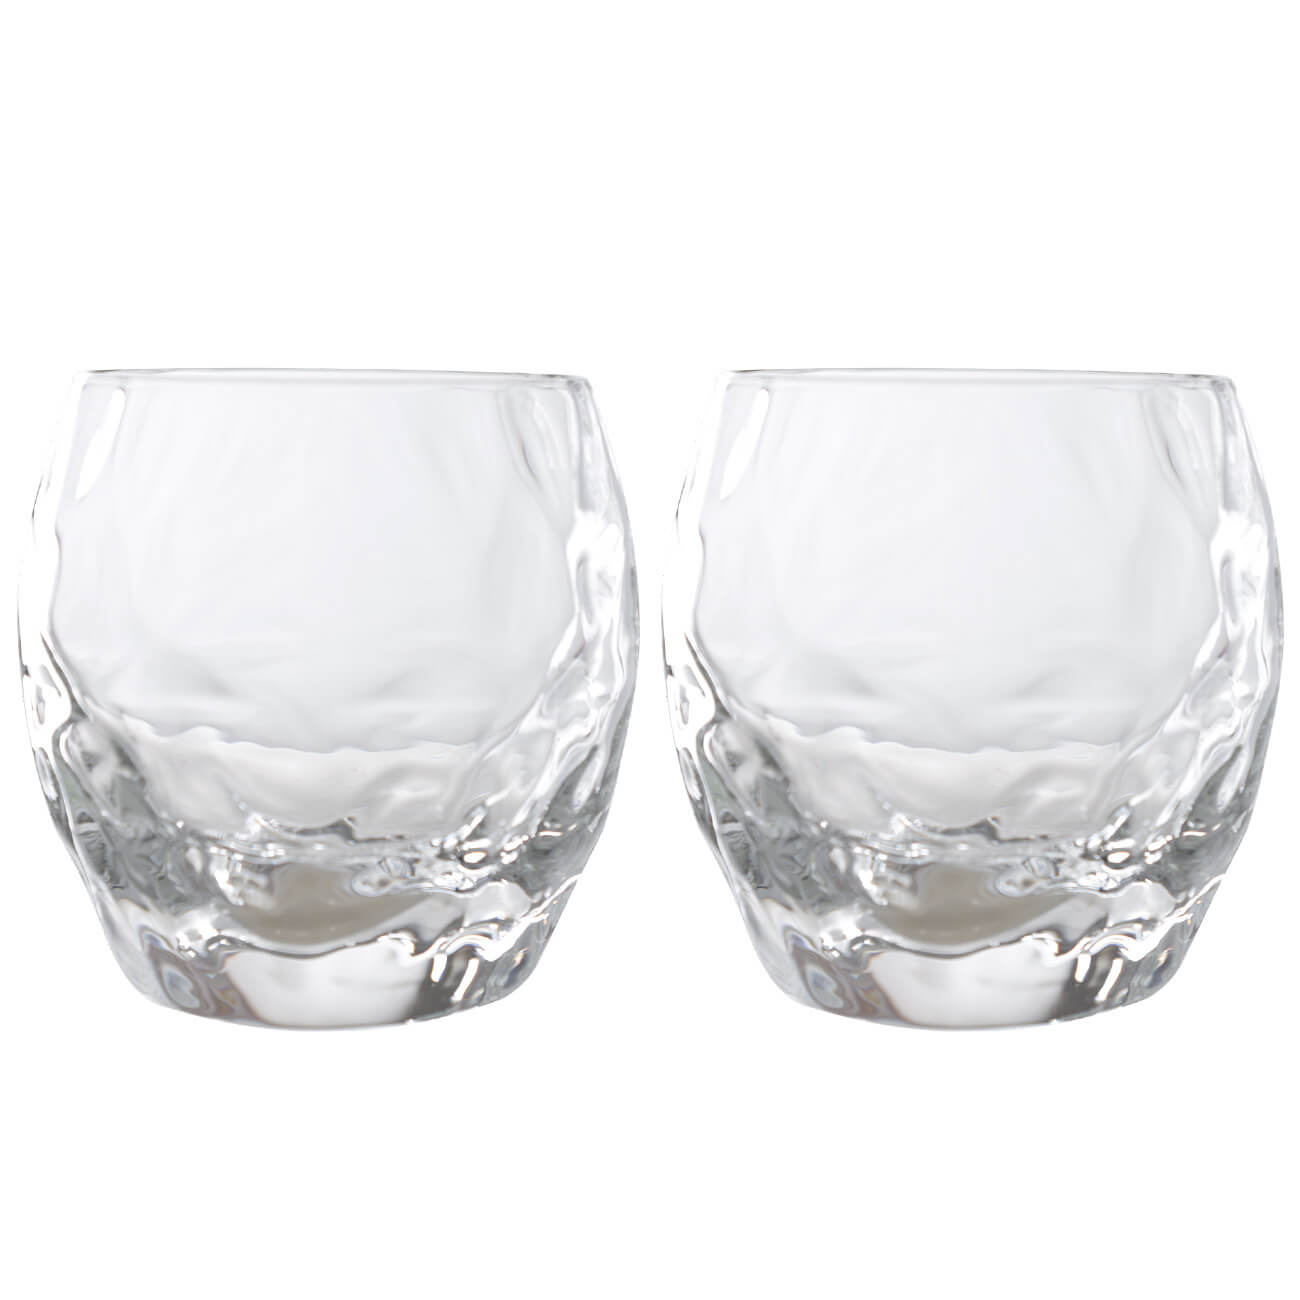 стакан для виски crystalex идеал набор 6 шт стекло 00895 Стакан для виски, 350 мл, 2 шт, стекло Р, Concave